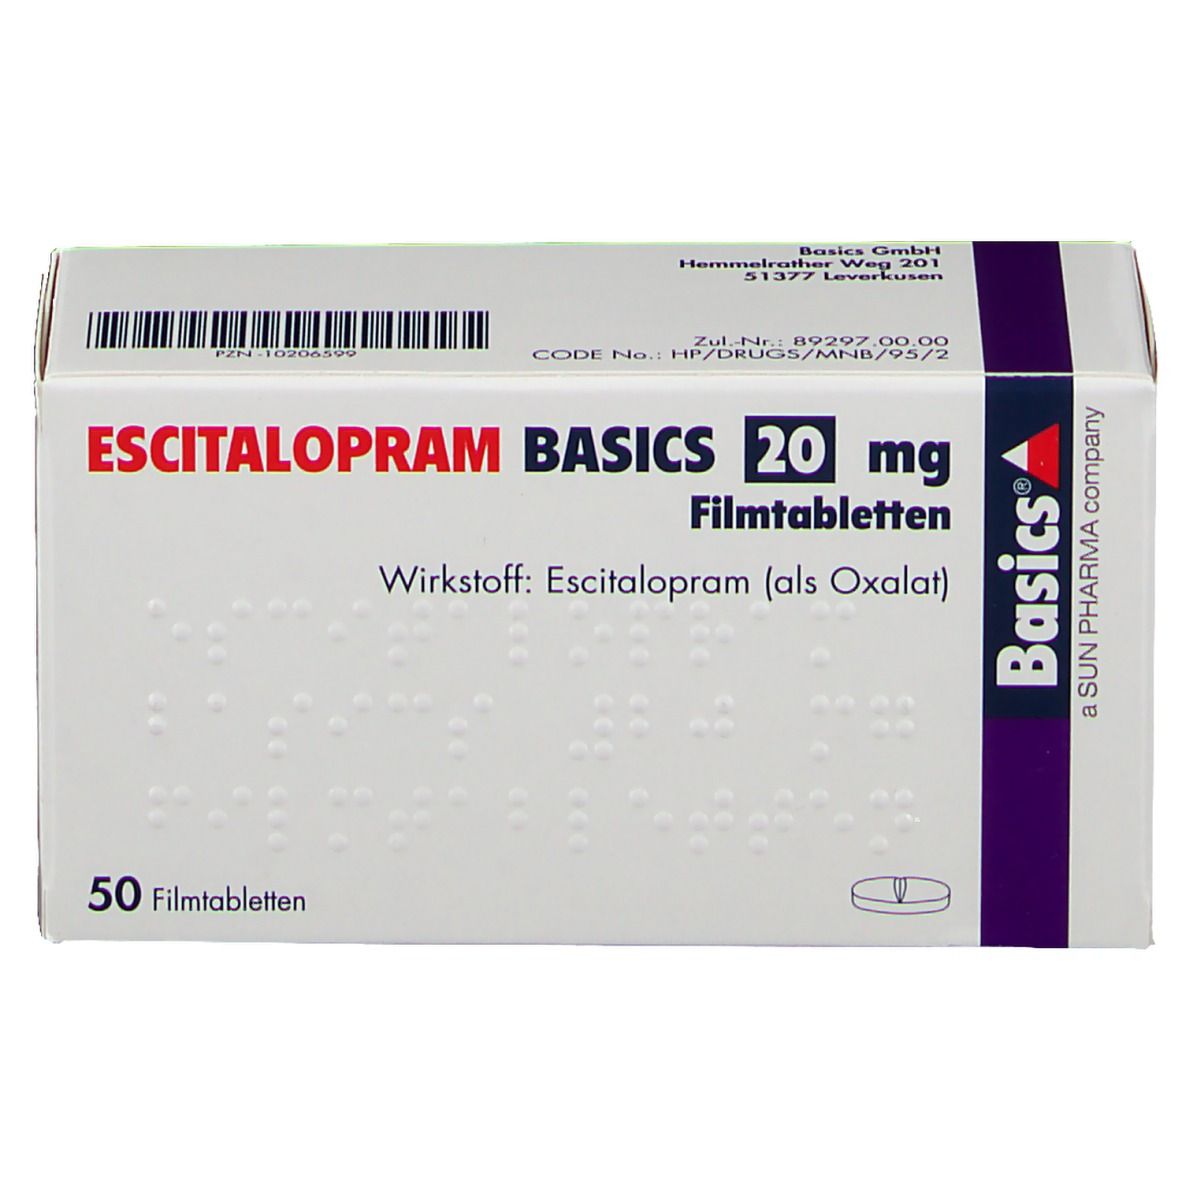 ESCITALOPRAM BASICS 20 mg